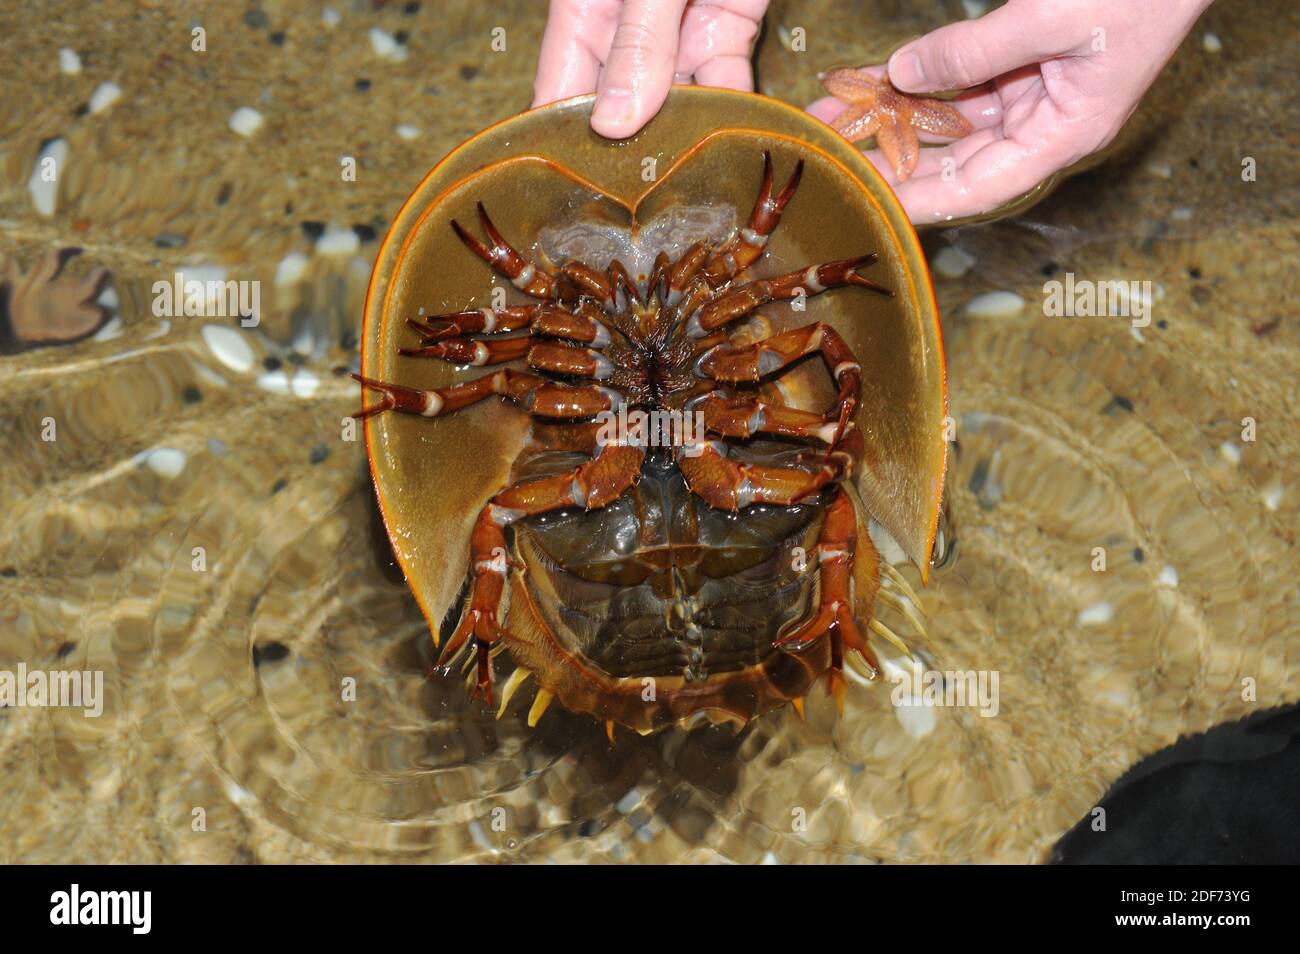 Atlantic horseshoe crab (Limulus polyphemus) is a marine arthropod native to Atlantic coast of North America and Gulf of Mexico. Stock Photo